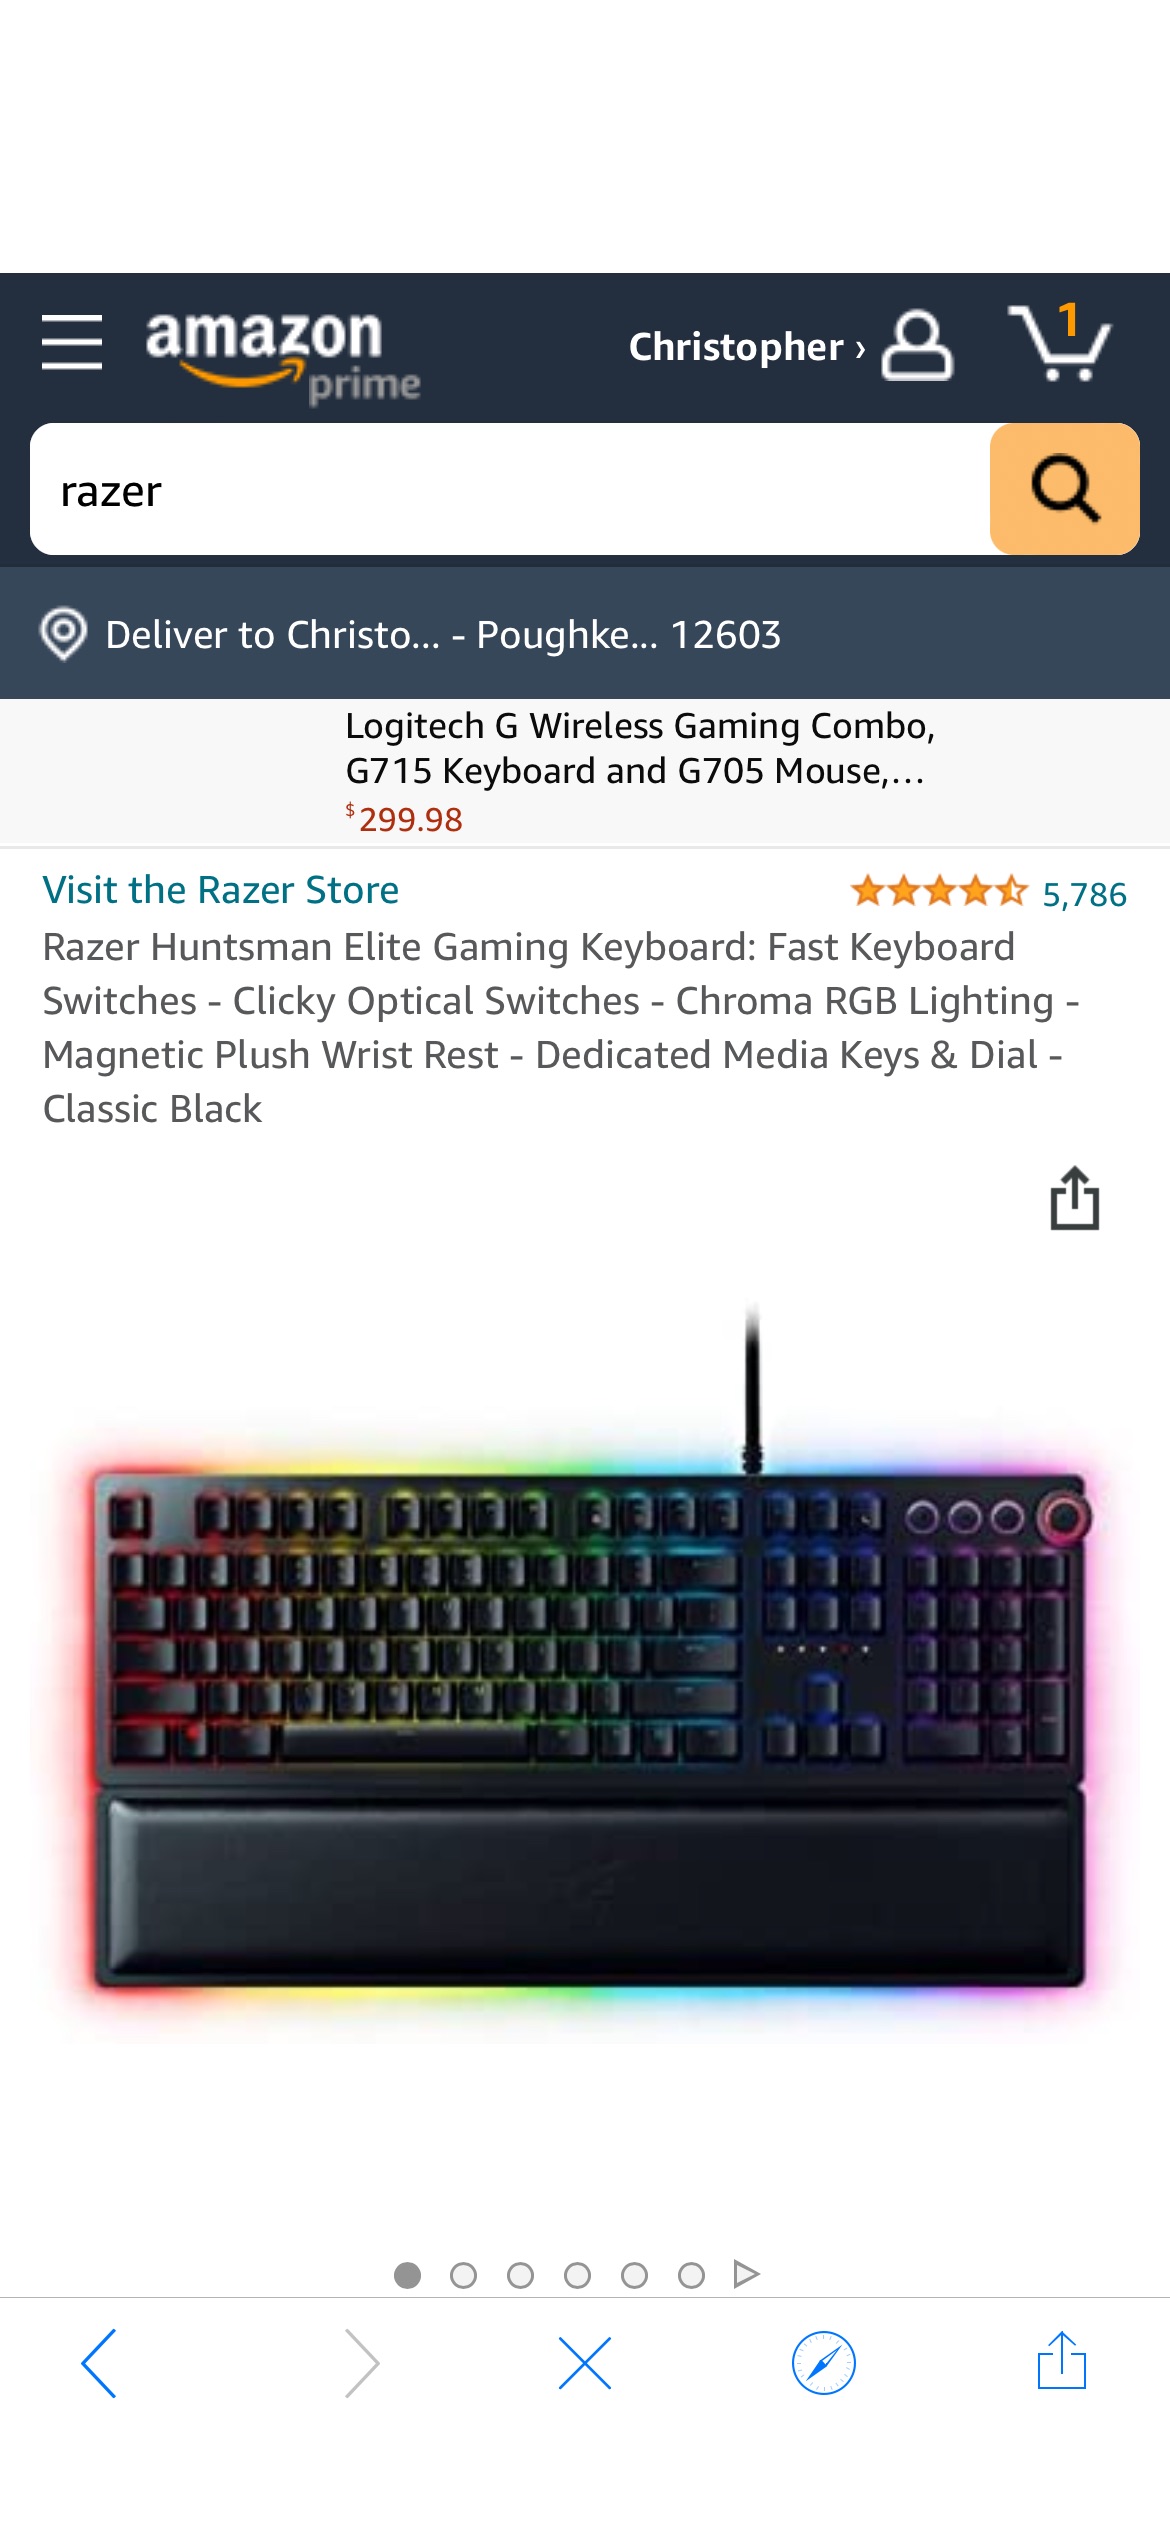 Amazon.com: Razer Huntsman Elite Gaming Keyboard: Fast Keyboard Switches - Clicky Optical Switches - Chroma RGB Lighting - Magnetic Plush键盘